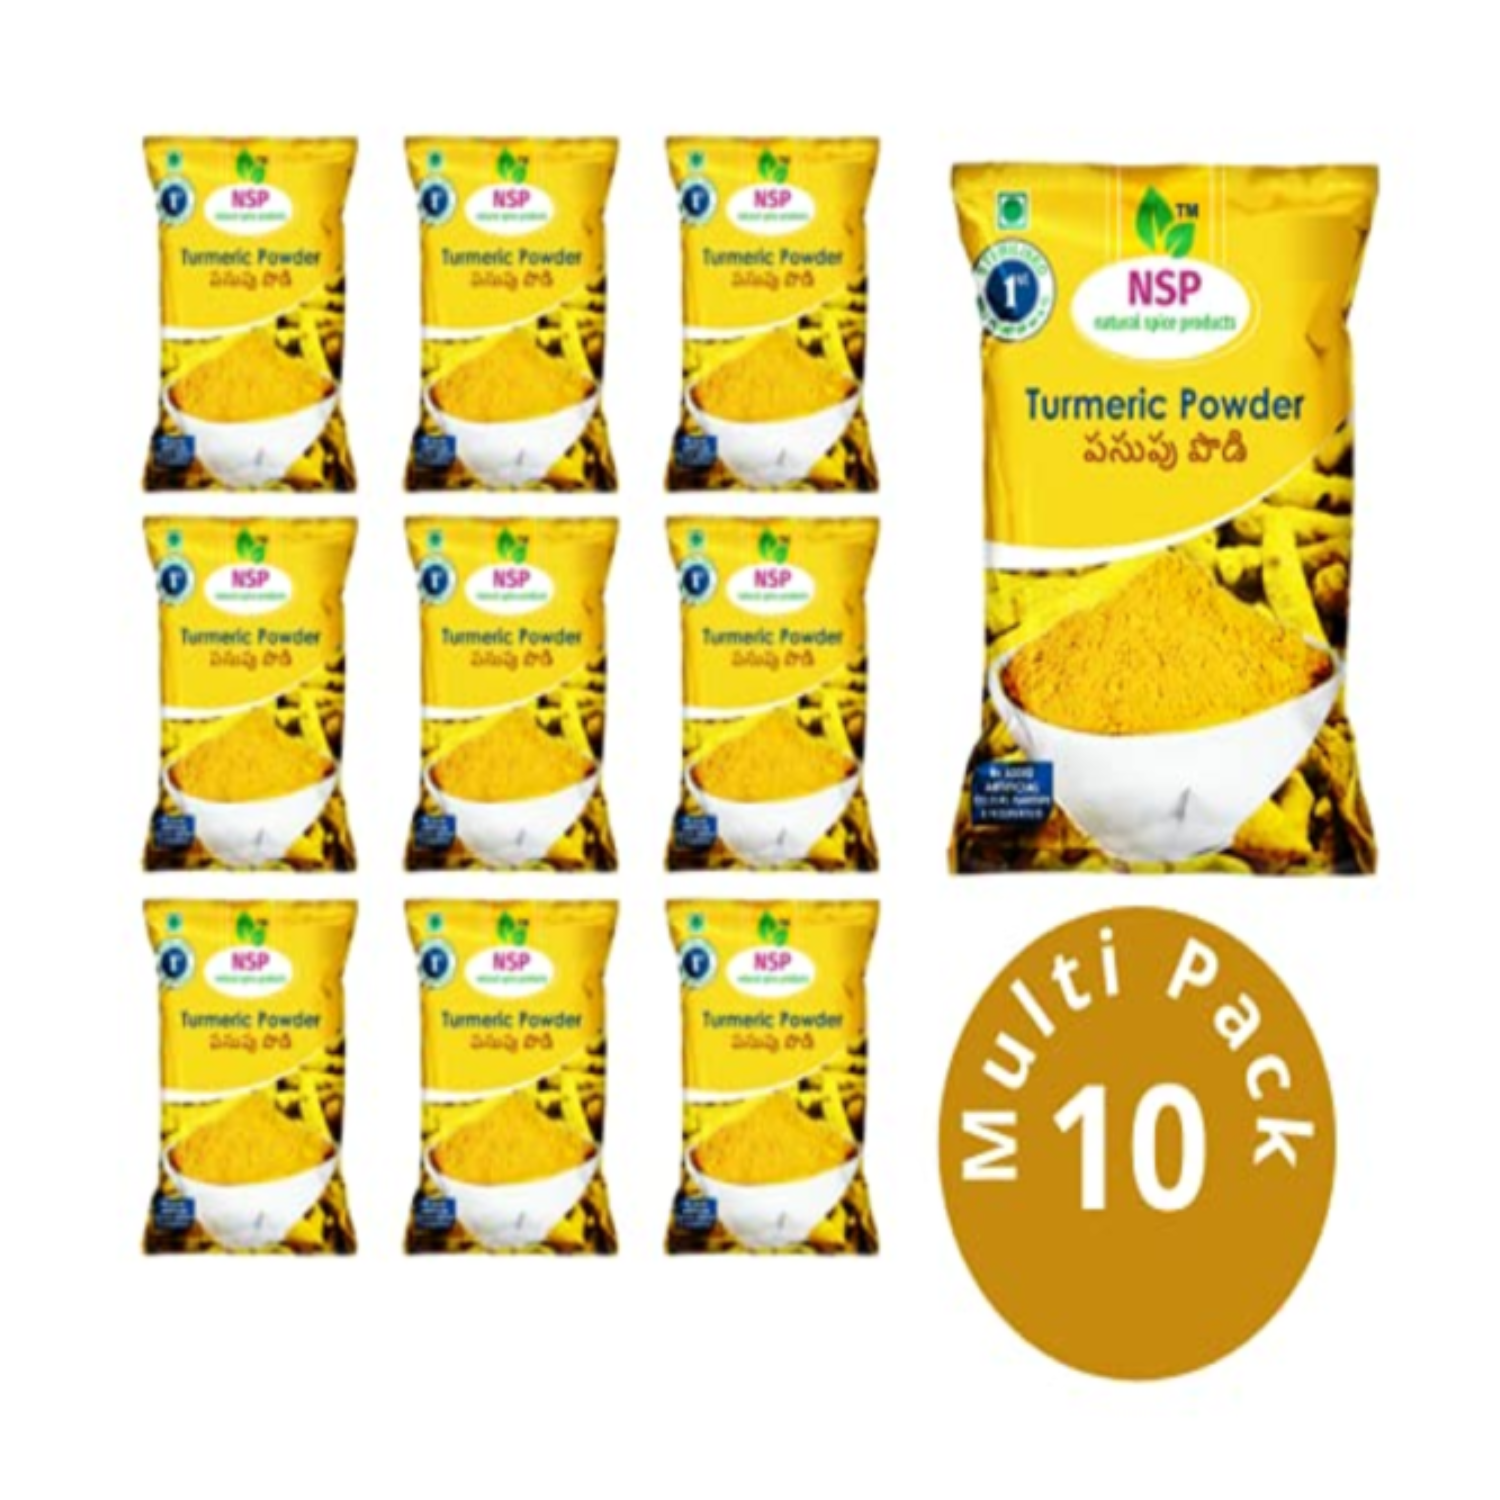 NSP natural spice product Turmeric Powder (Natural Haldi Powder) 100g -Pack of 10